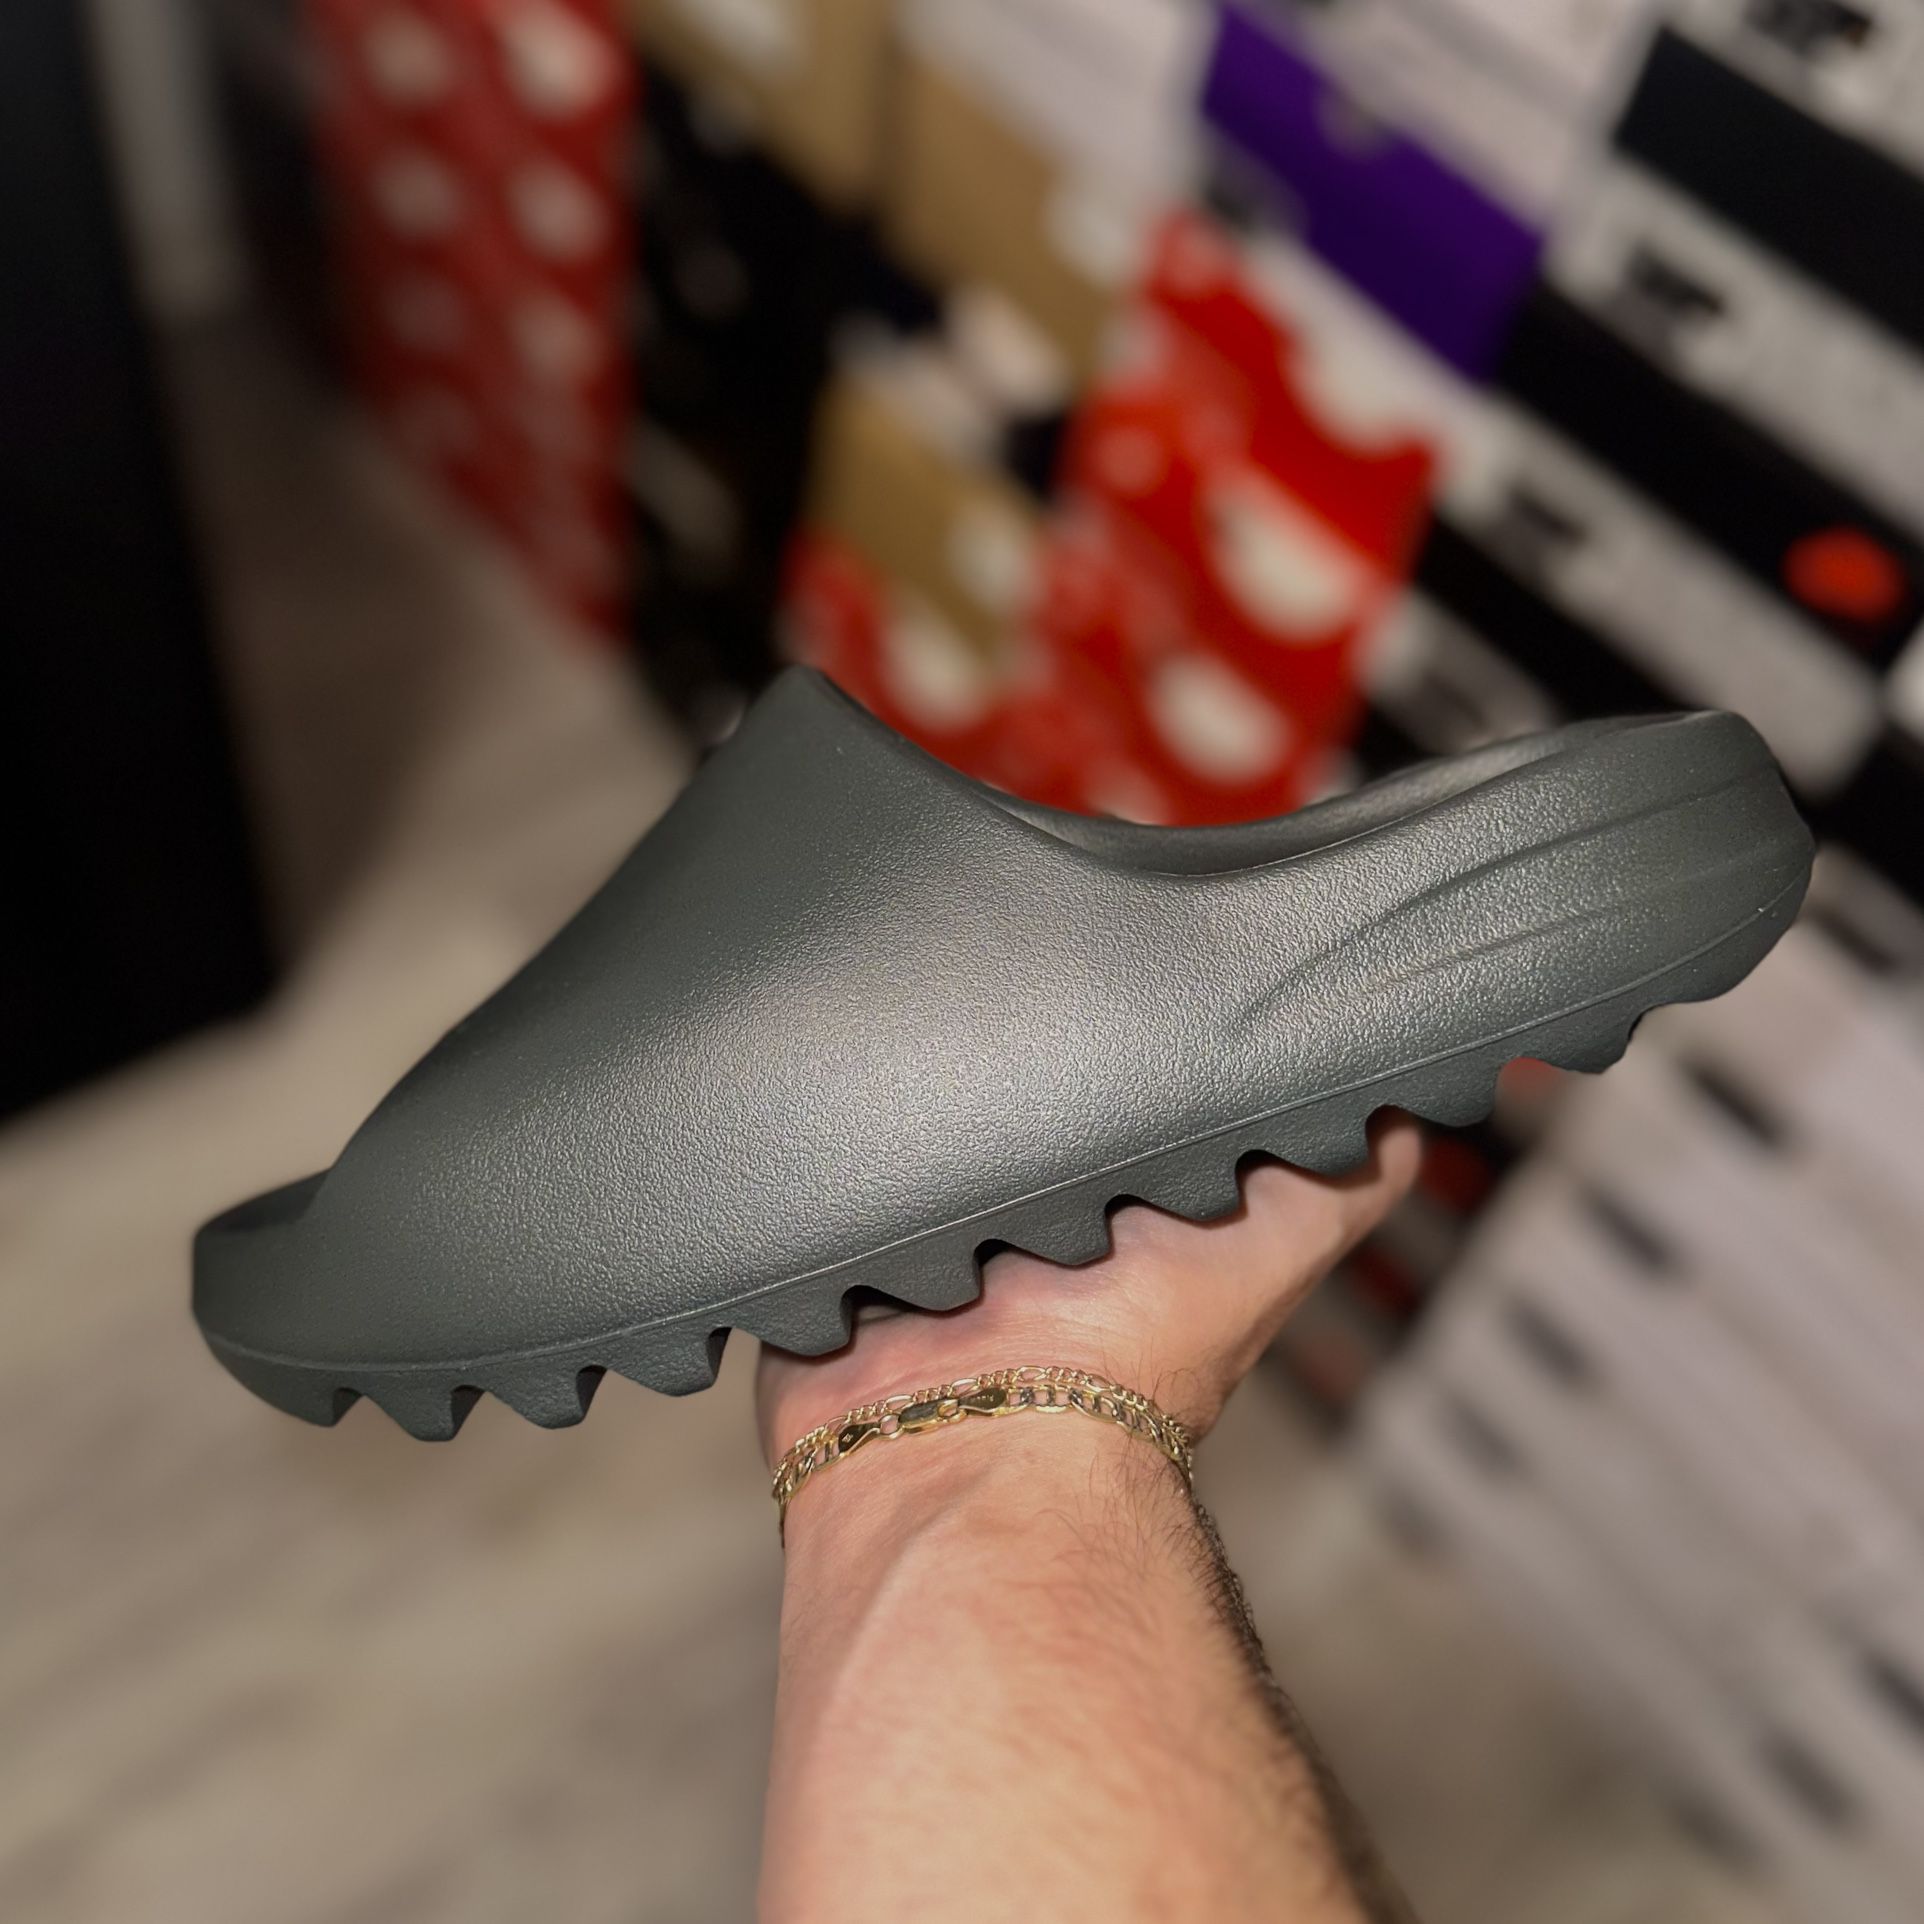 adidas Yeezy Slide “Dark Onyx” / “Granite” / “Slate Grey” Sizes 6 / 8 / 9 / 10 / 13 IN HAND BRAND NEW